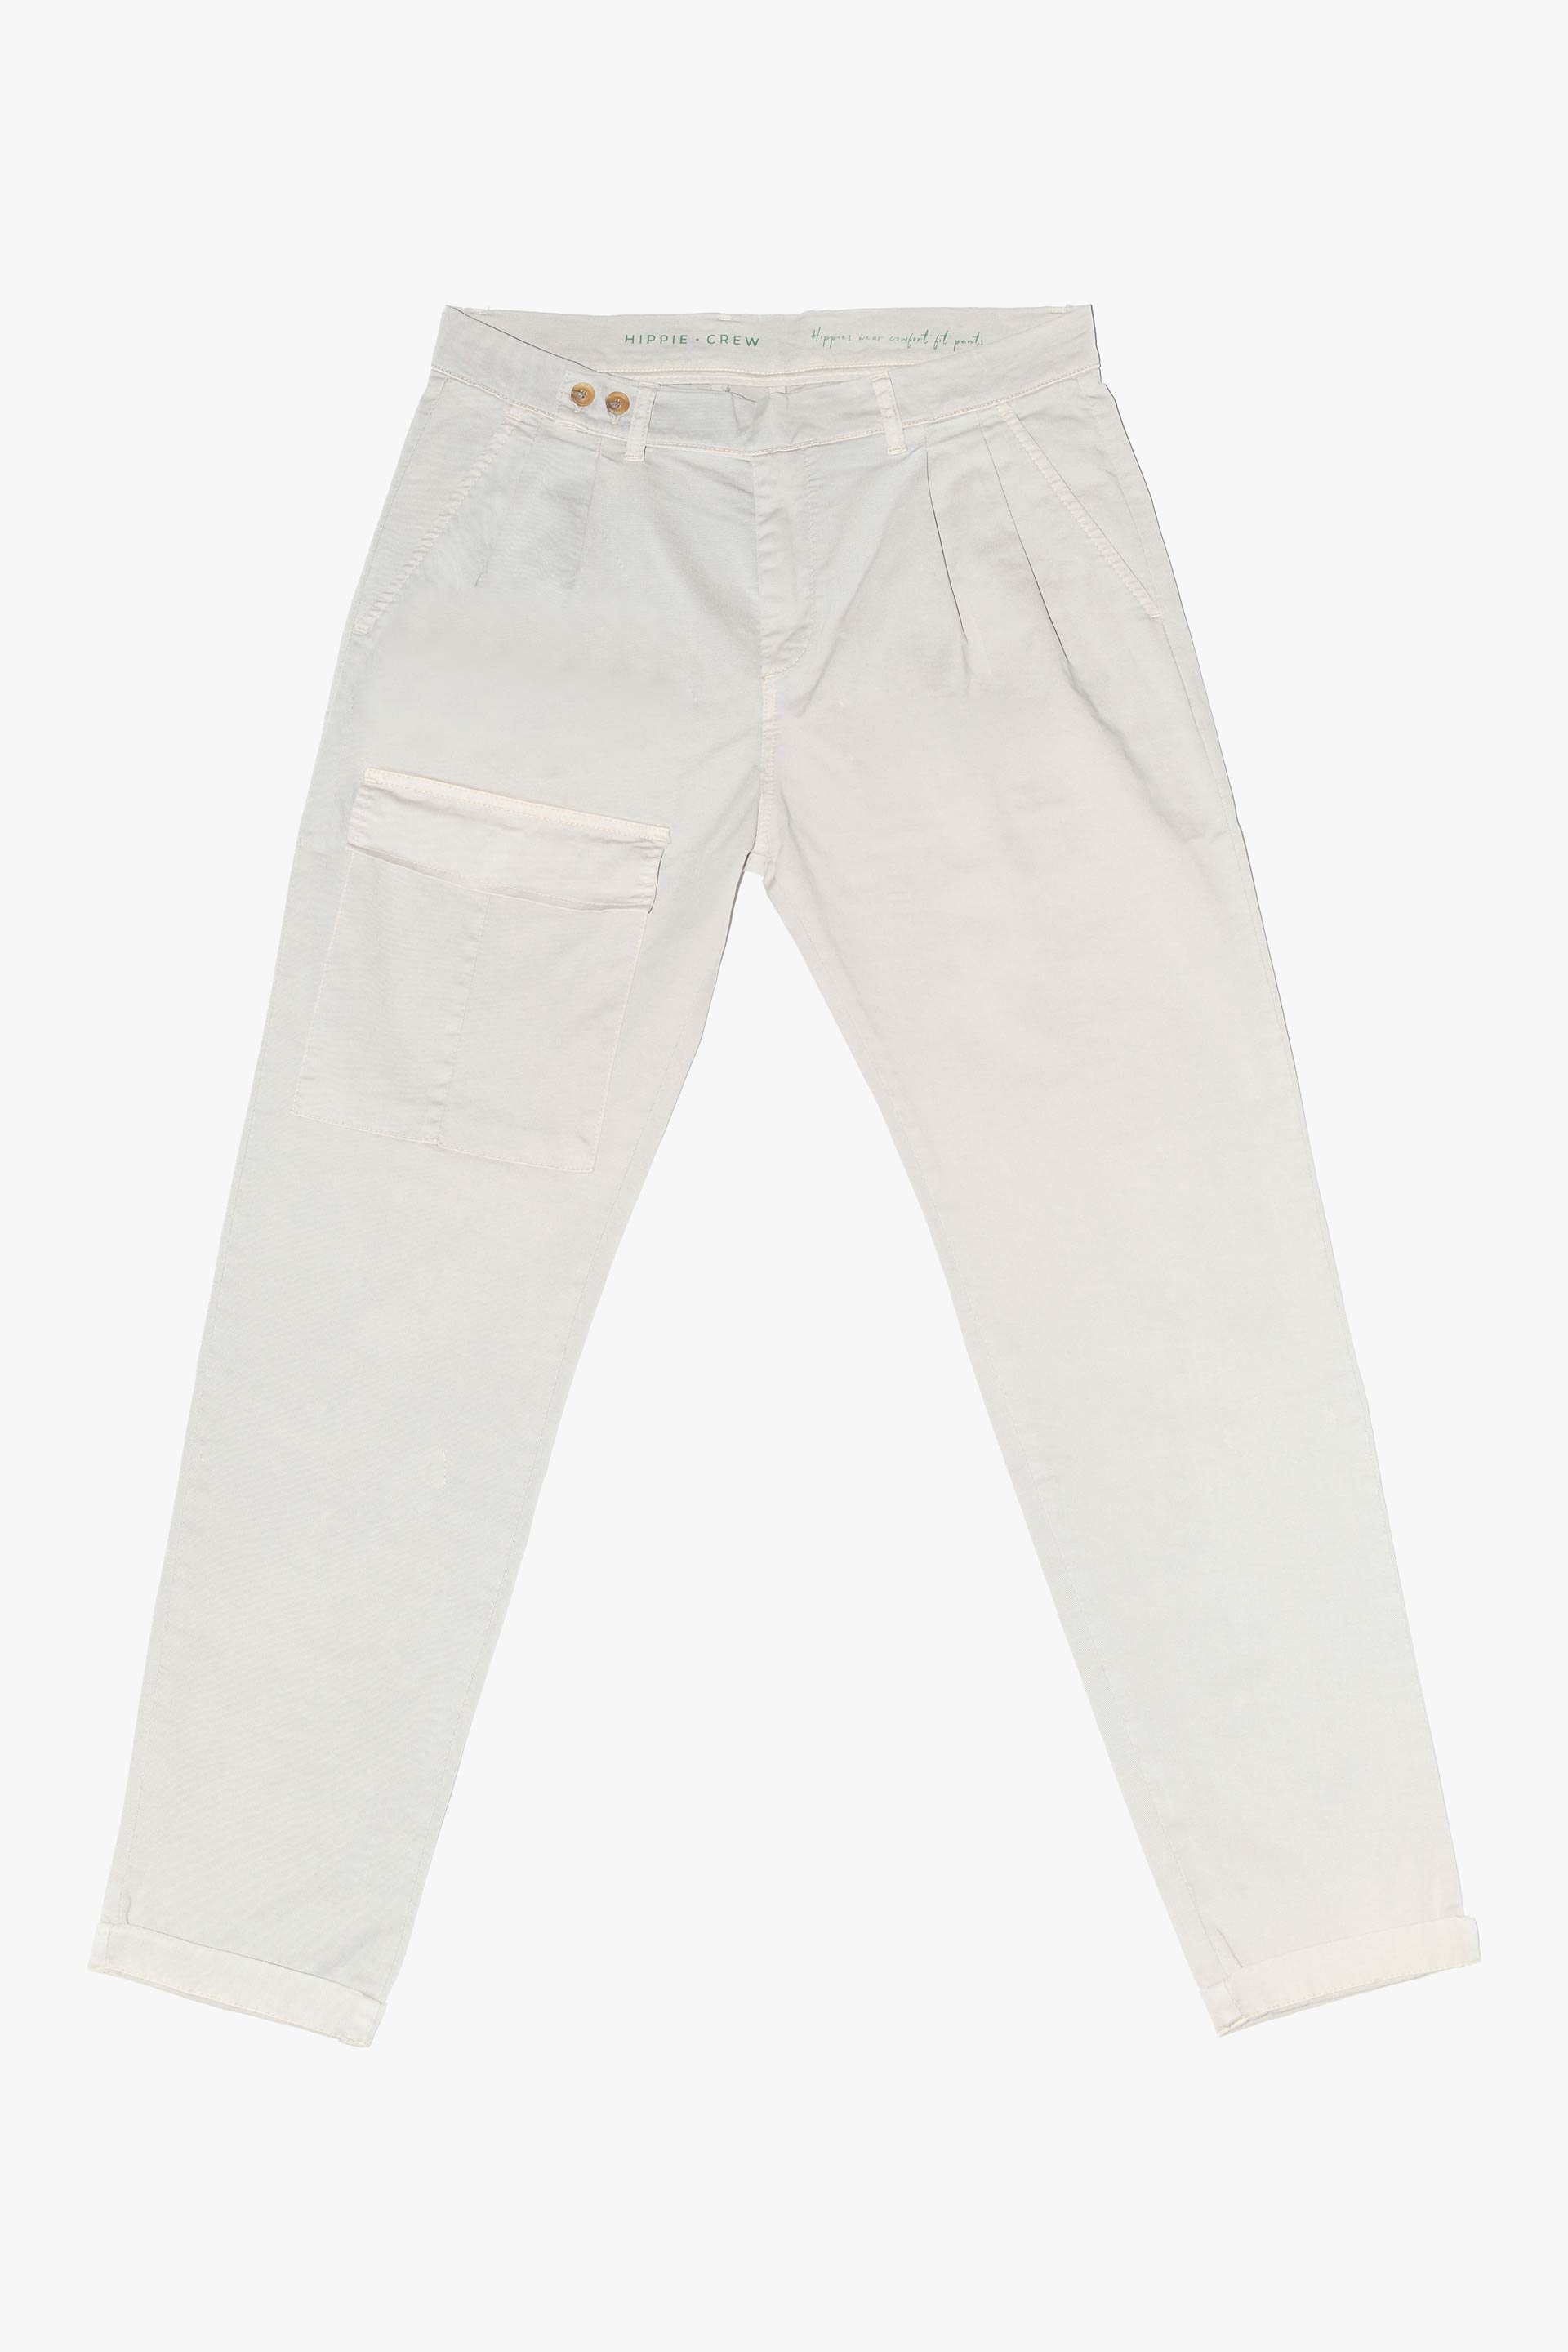 Jersey de hombre con cuello redondo en lana merino Blooker jeans Made in  Italy - Antica Sartoria Napoletana